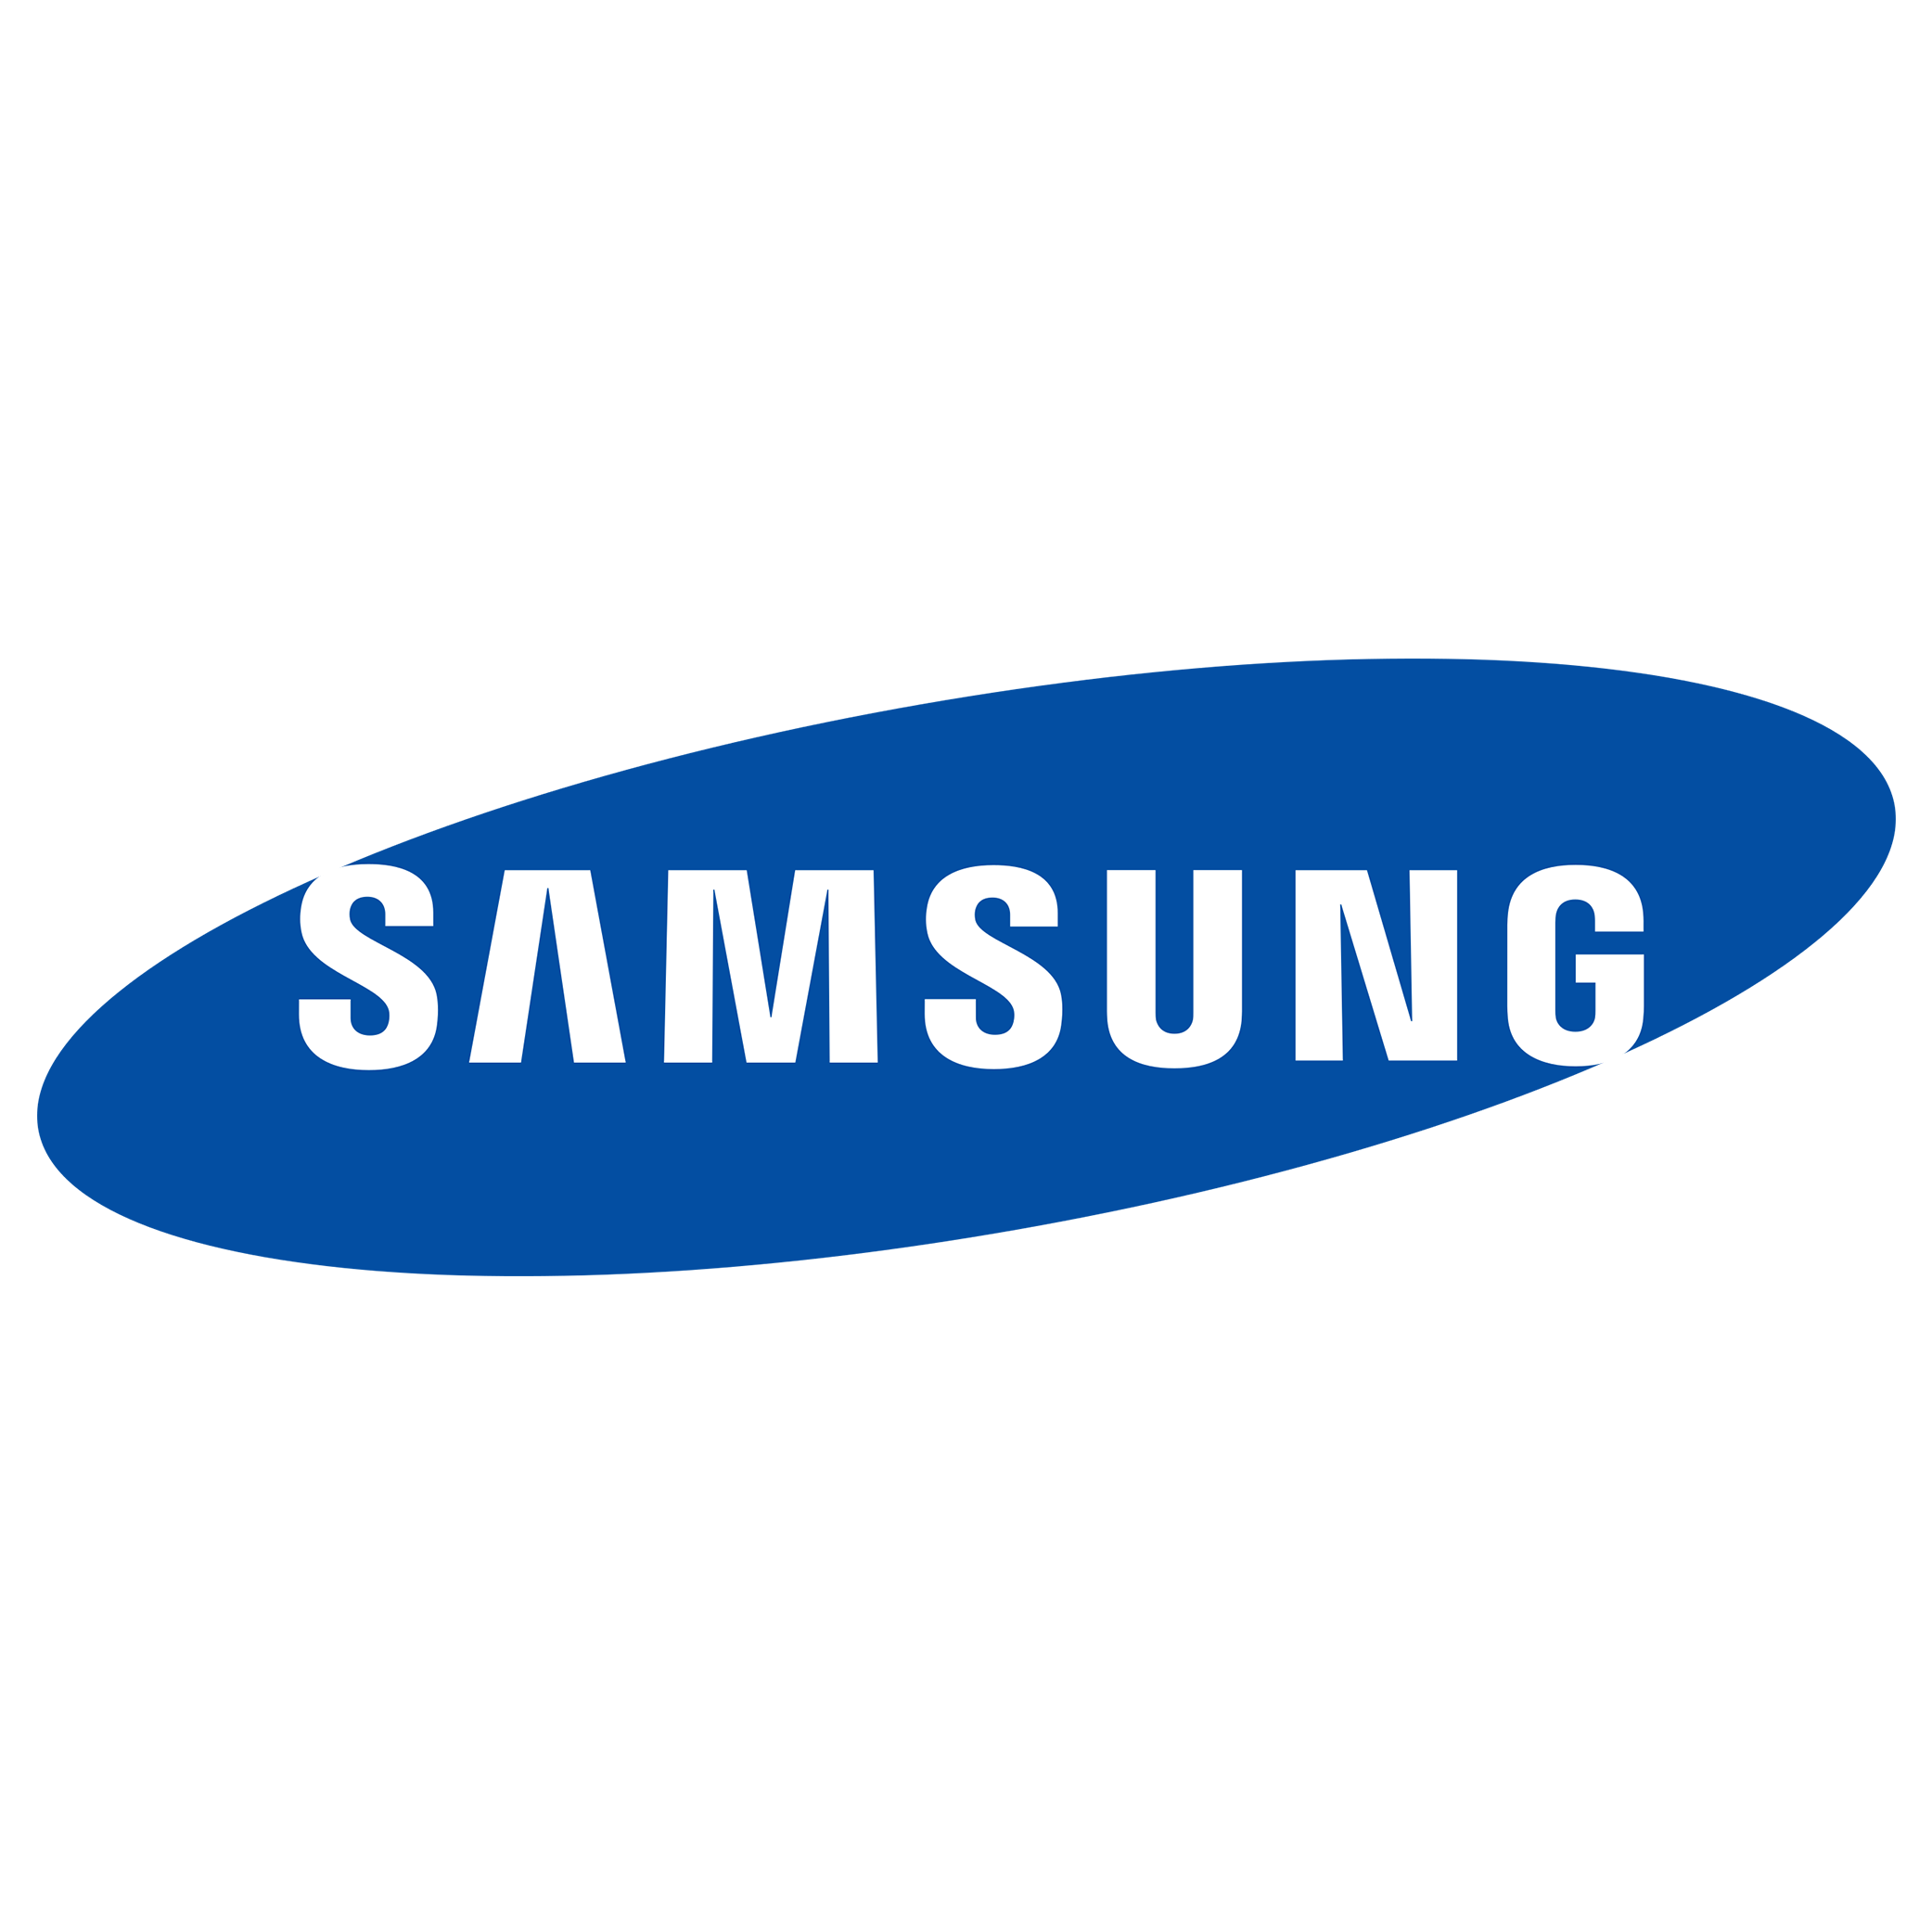 Samsung with MultiTv | video processing platform